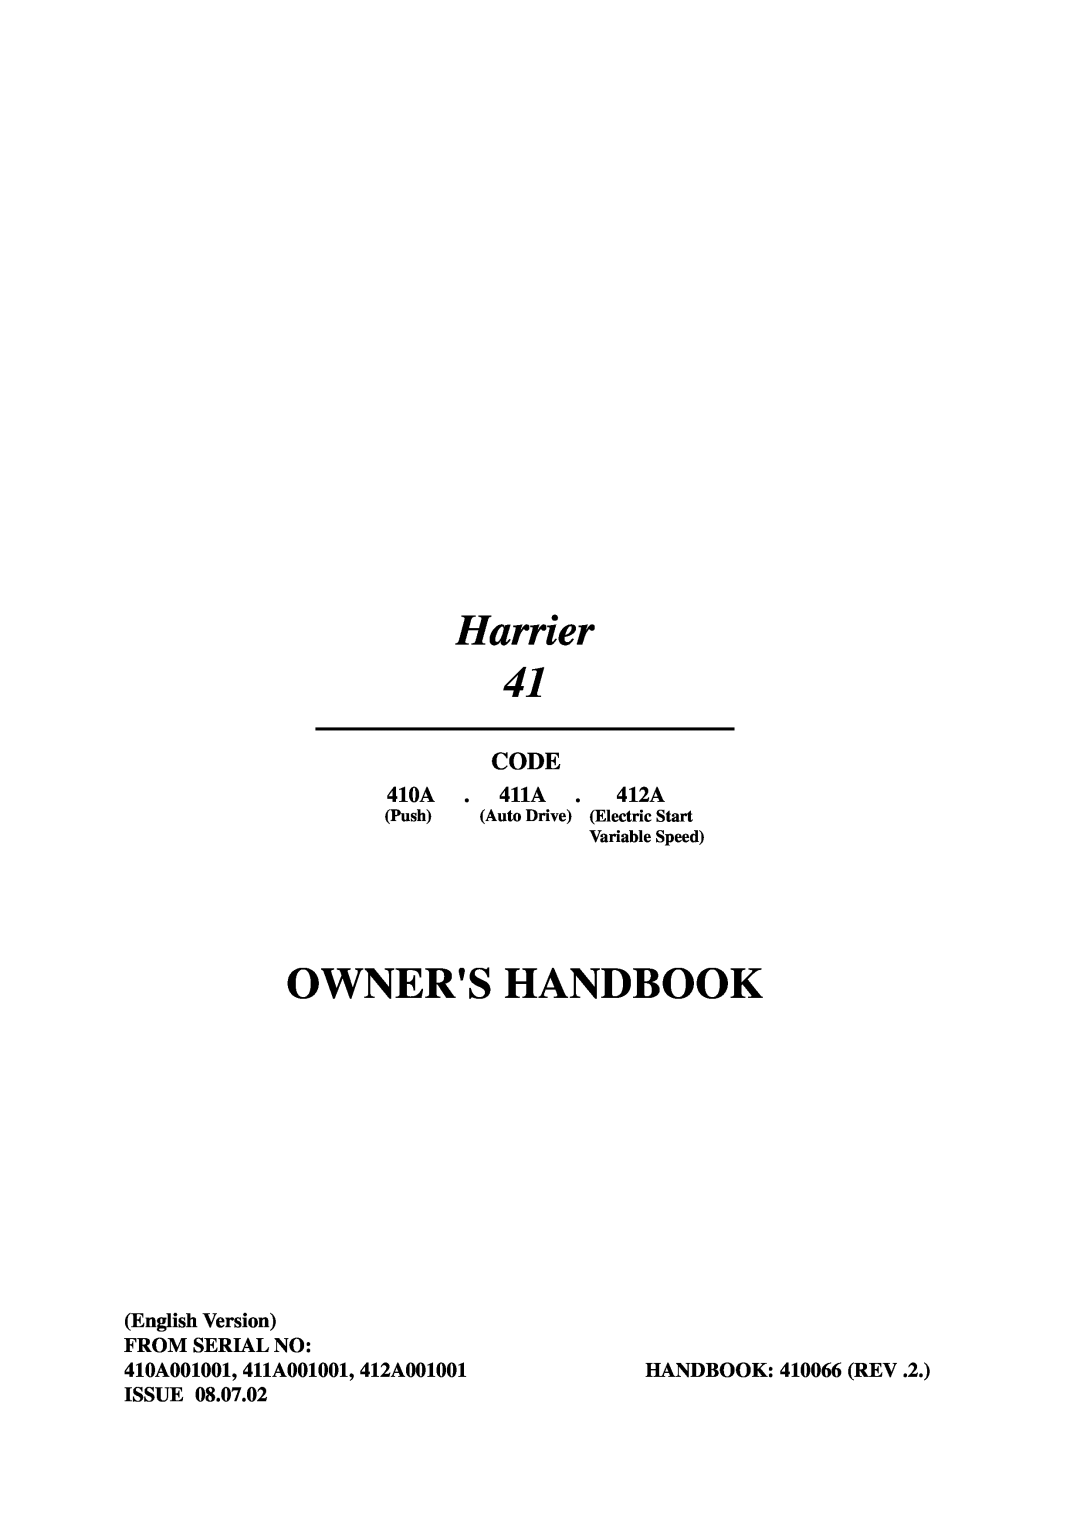 Briggs & Stratton Harrier 41 manual Owners Handbook, Code, 410A, 411A, 412A, HANDBOOK 410066 REV, Push, Auto Drive 